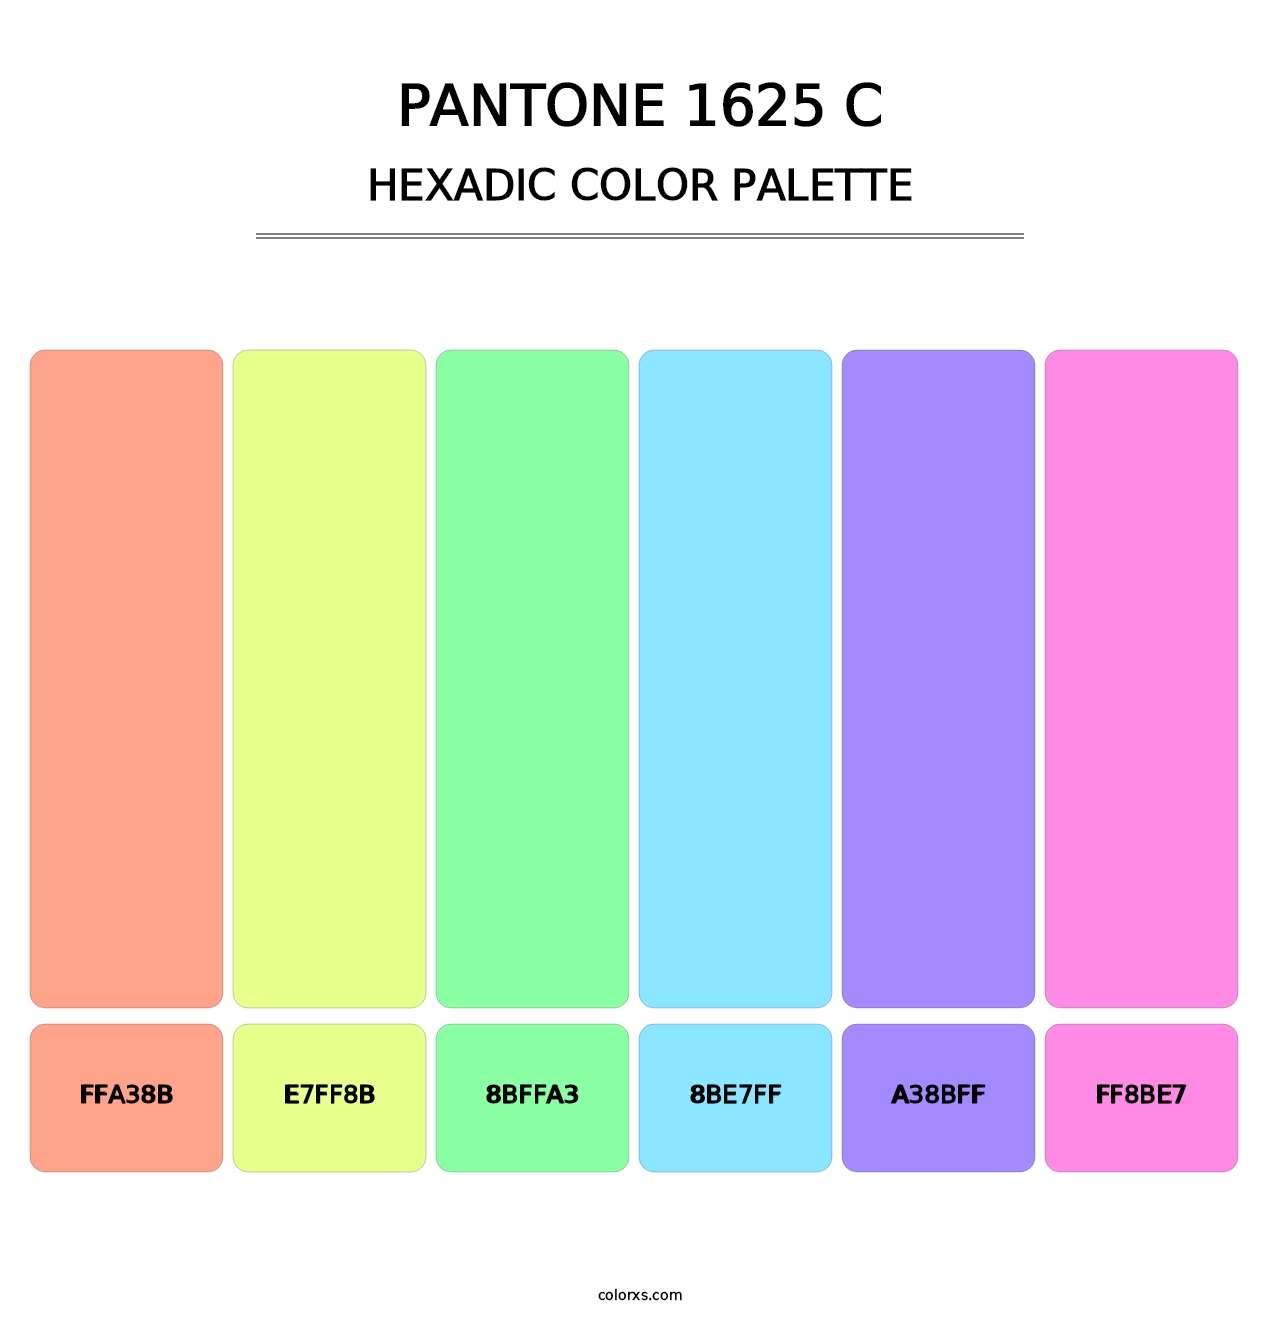 PANTONE 1625 C - Hexadic Color Palette